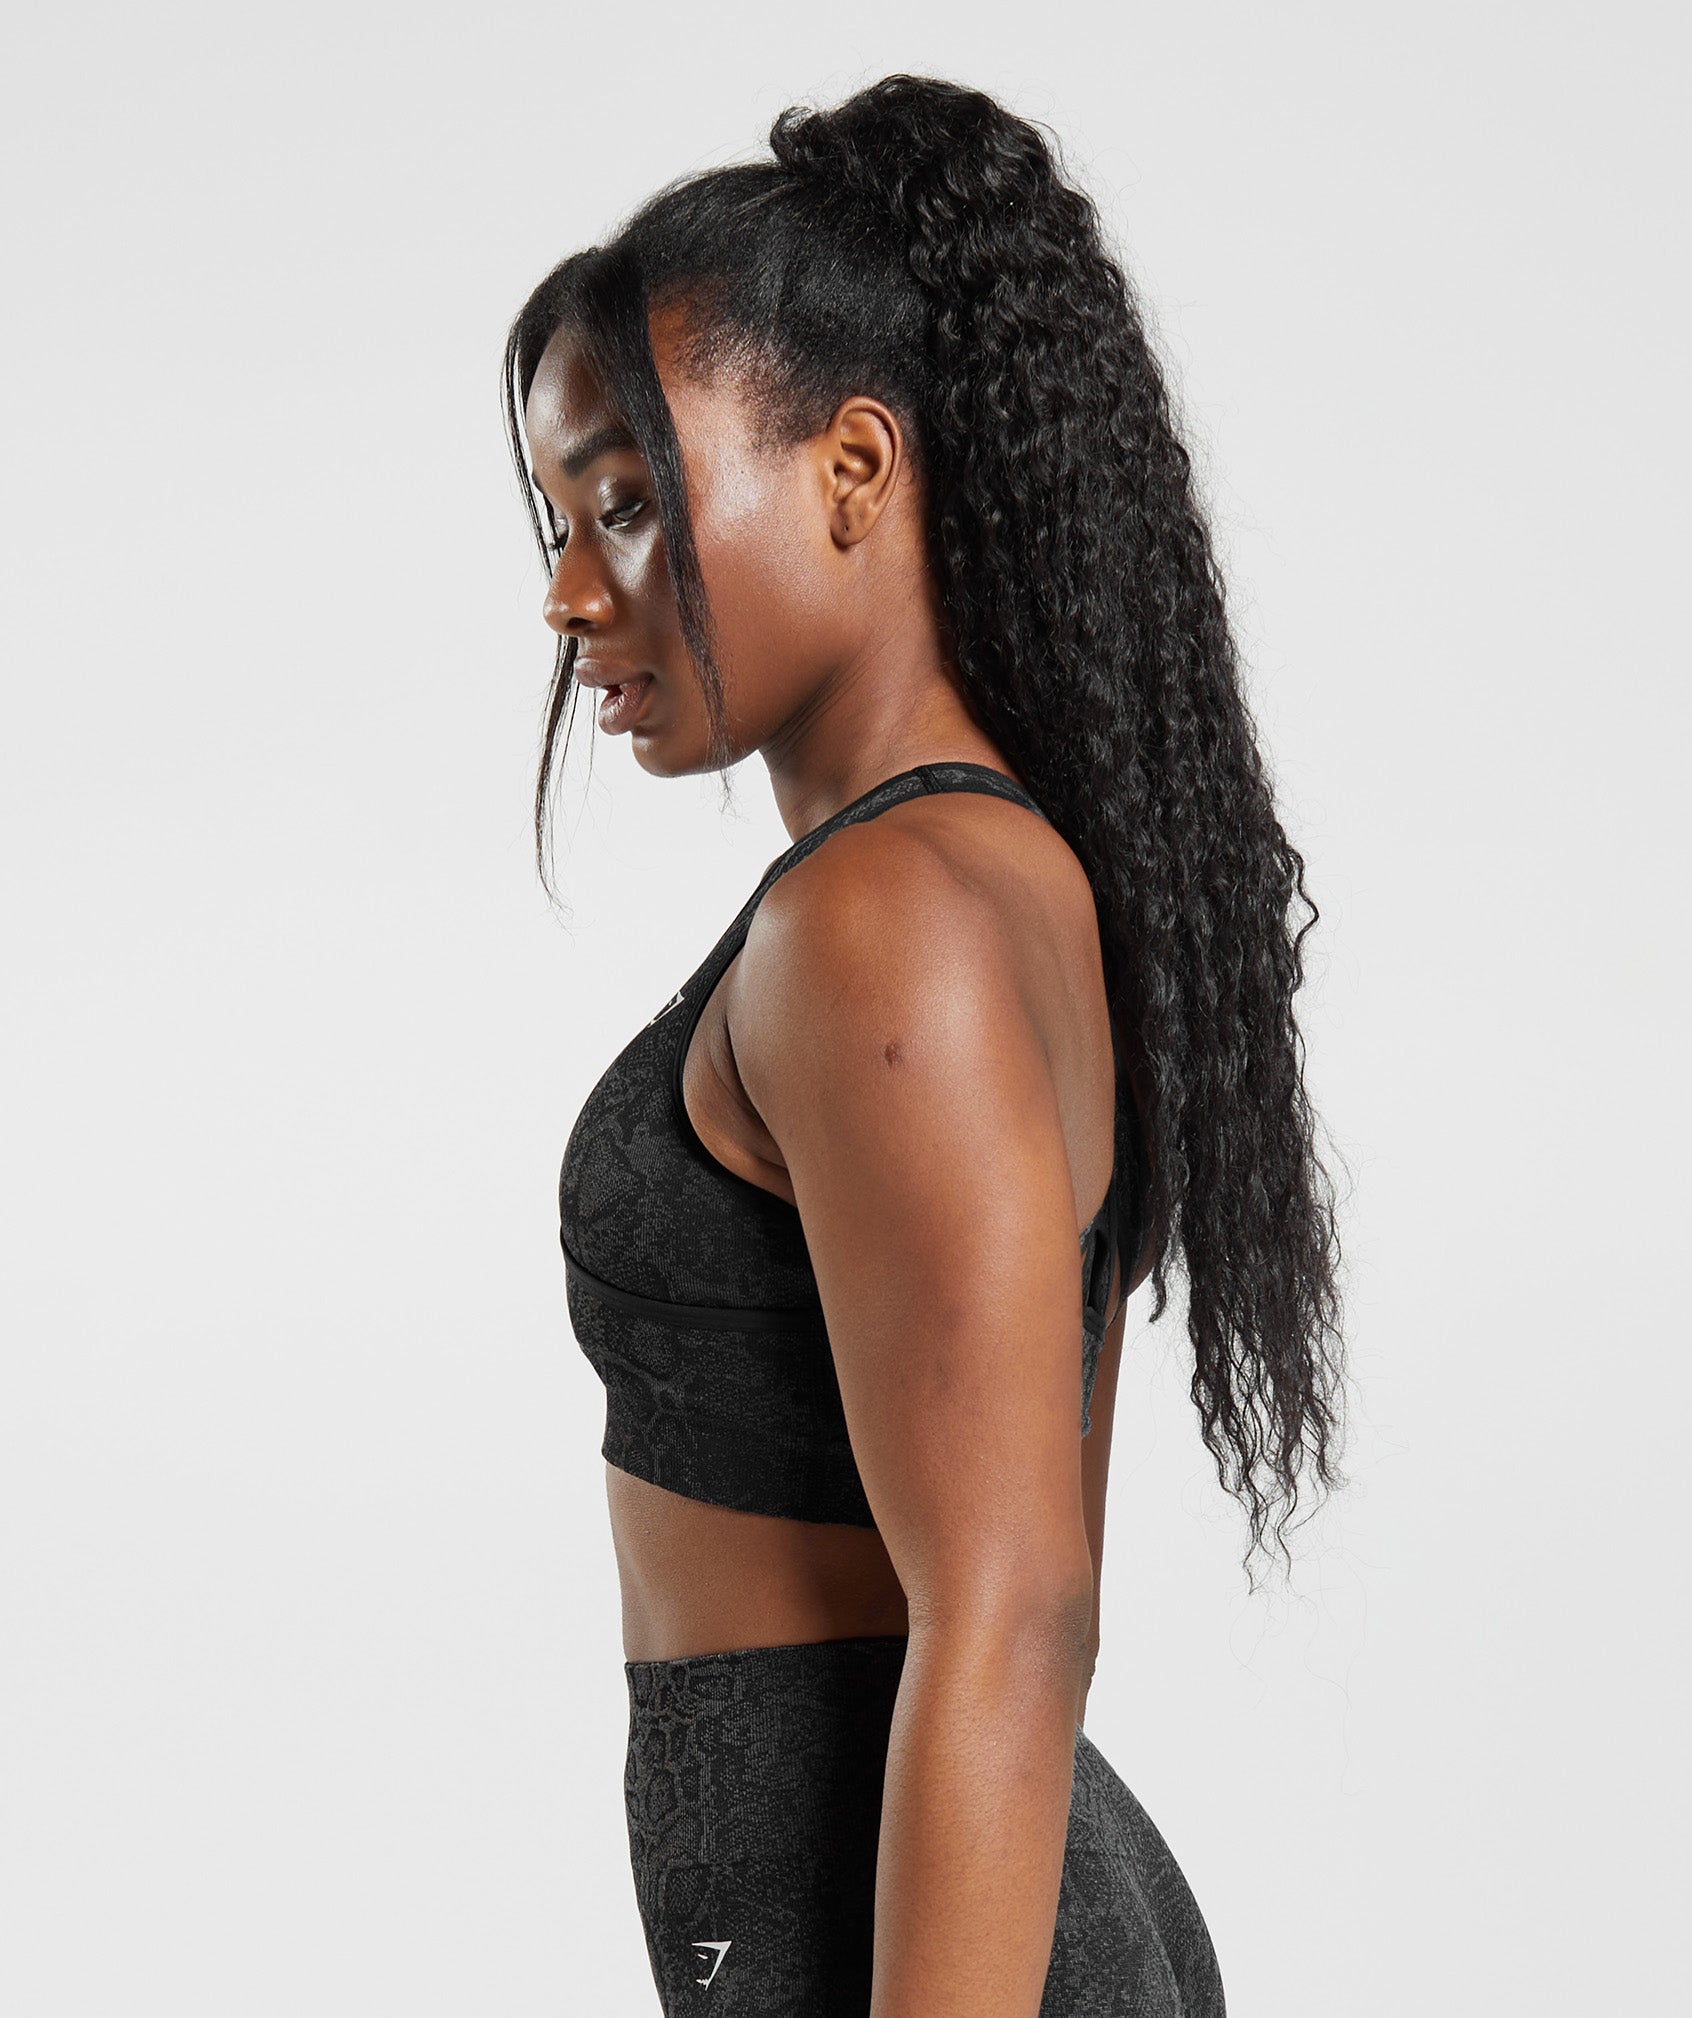 Gymshark Womens Essential Black Scoop Neck Racerback Pullover Sports Bra  Size XS